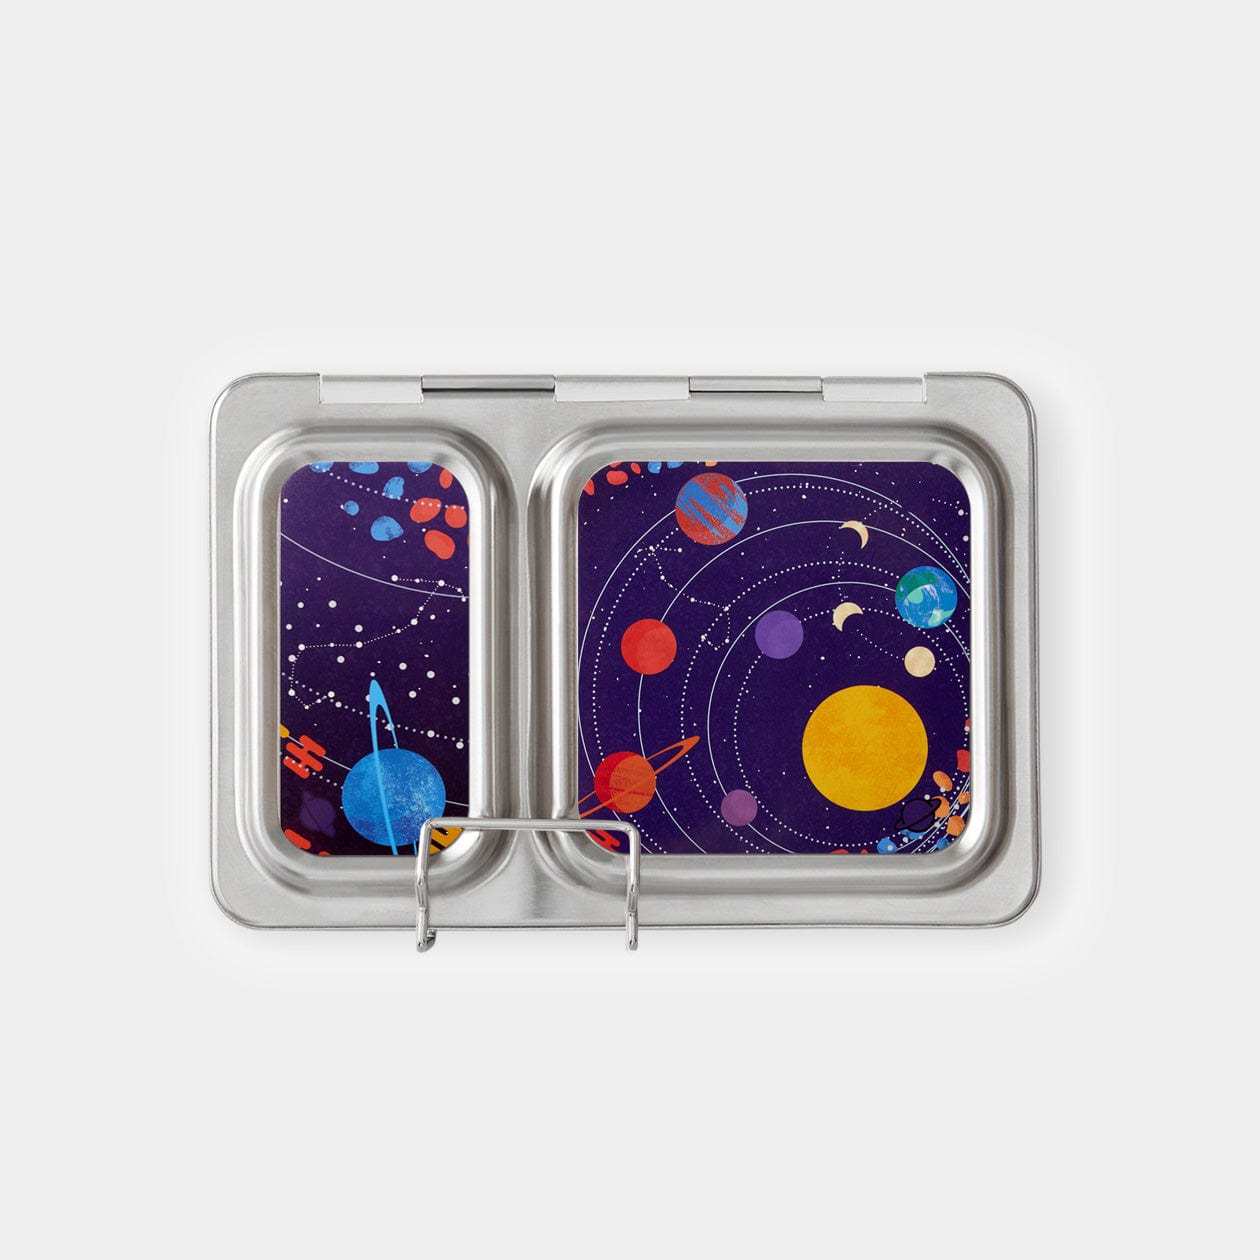 Planet Box 5 Compartment Lunch Box, Aluminum Neon Fruit Magnets